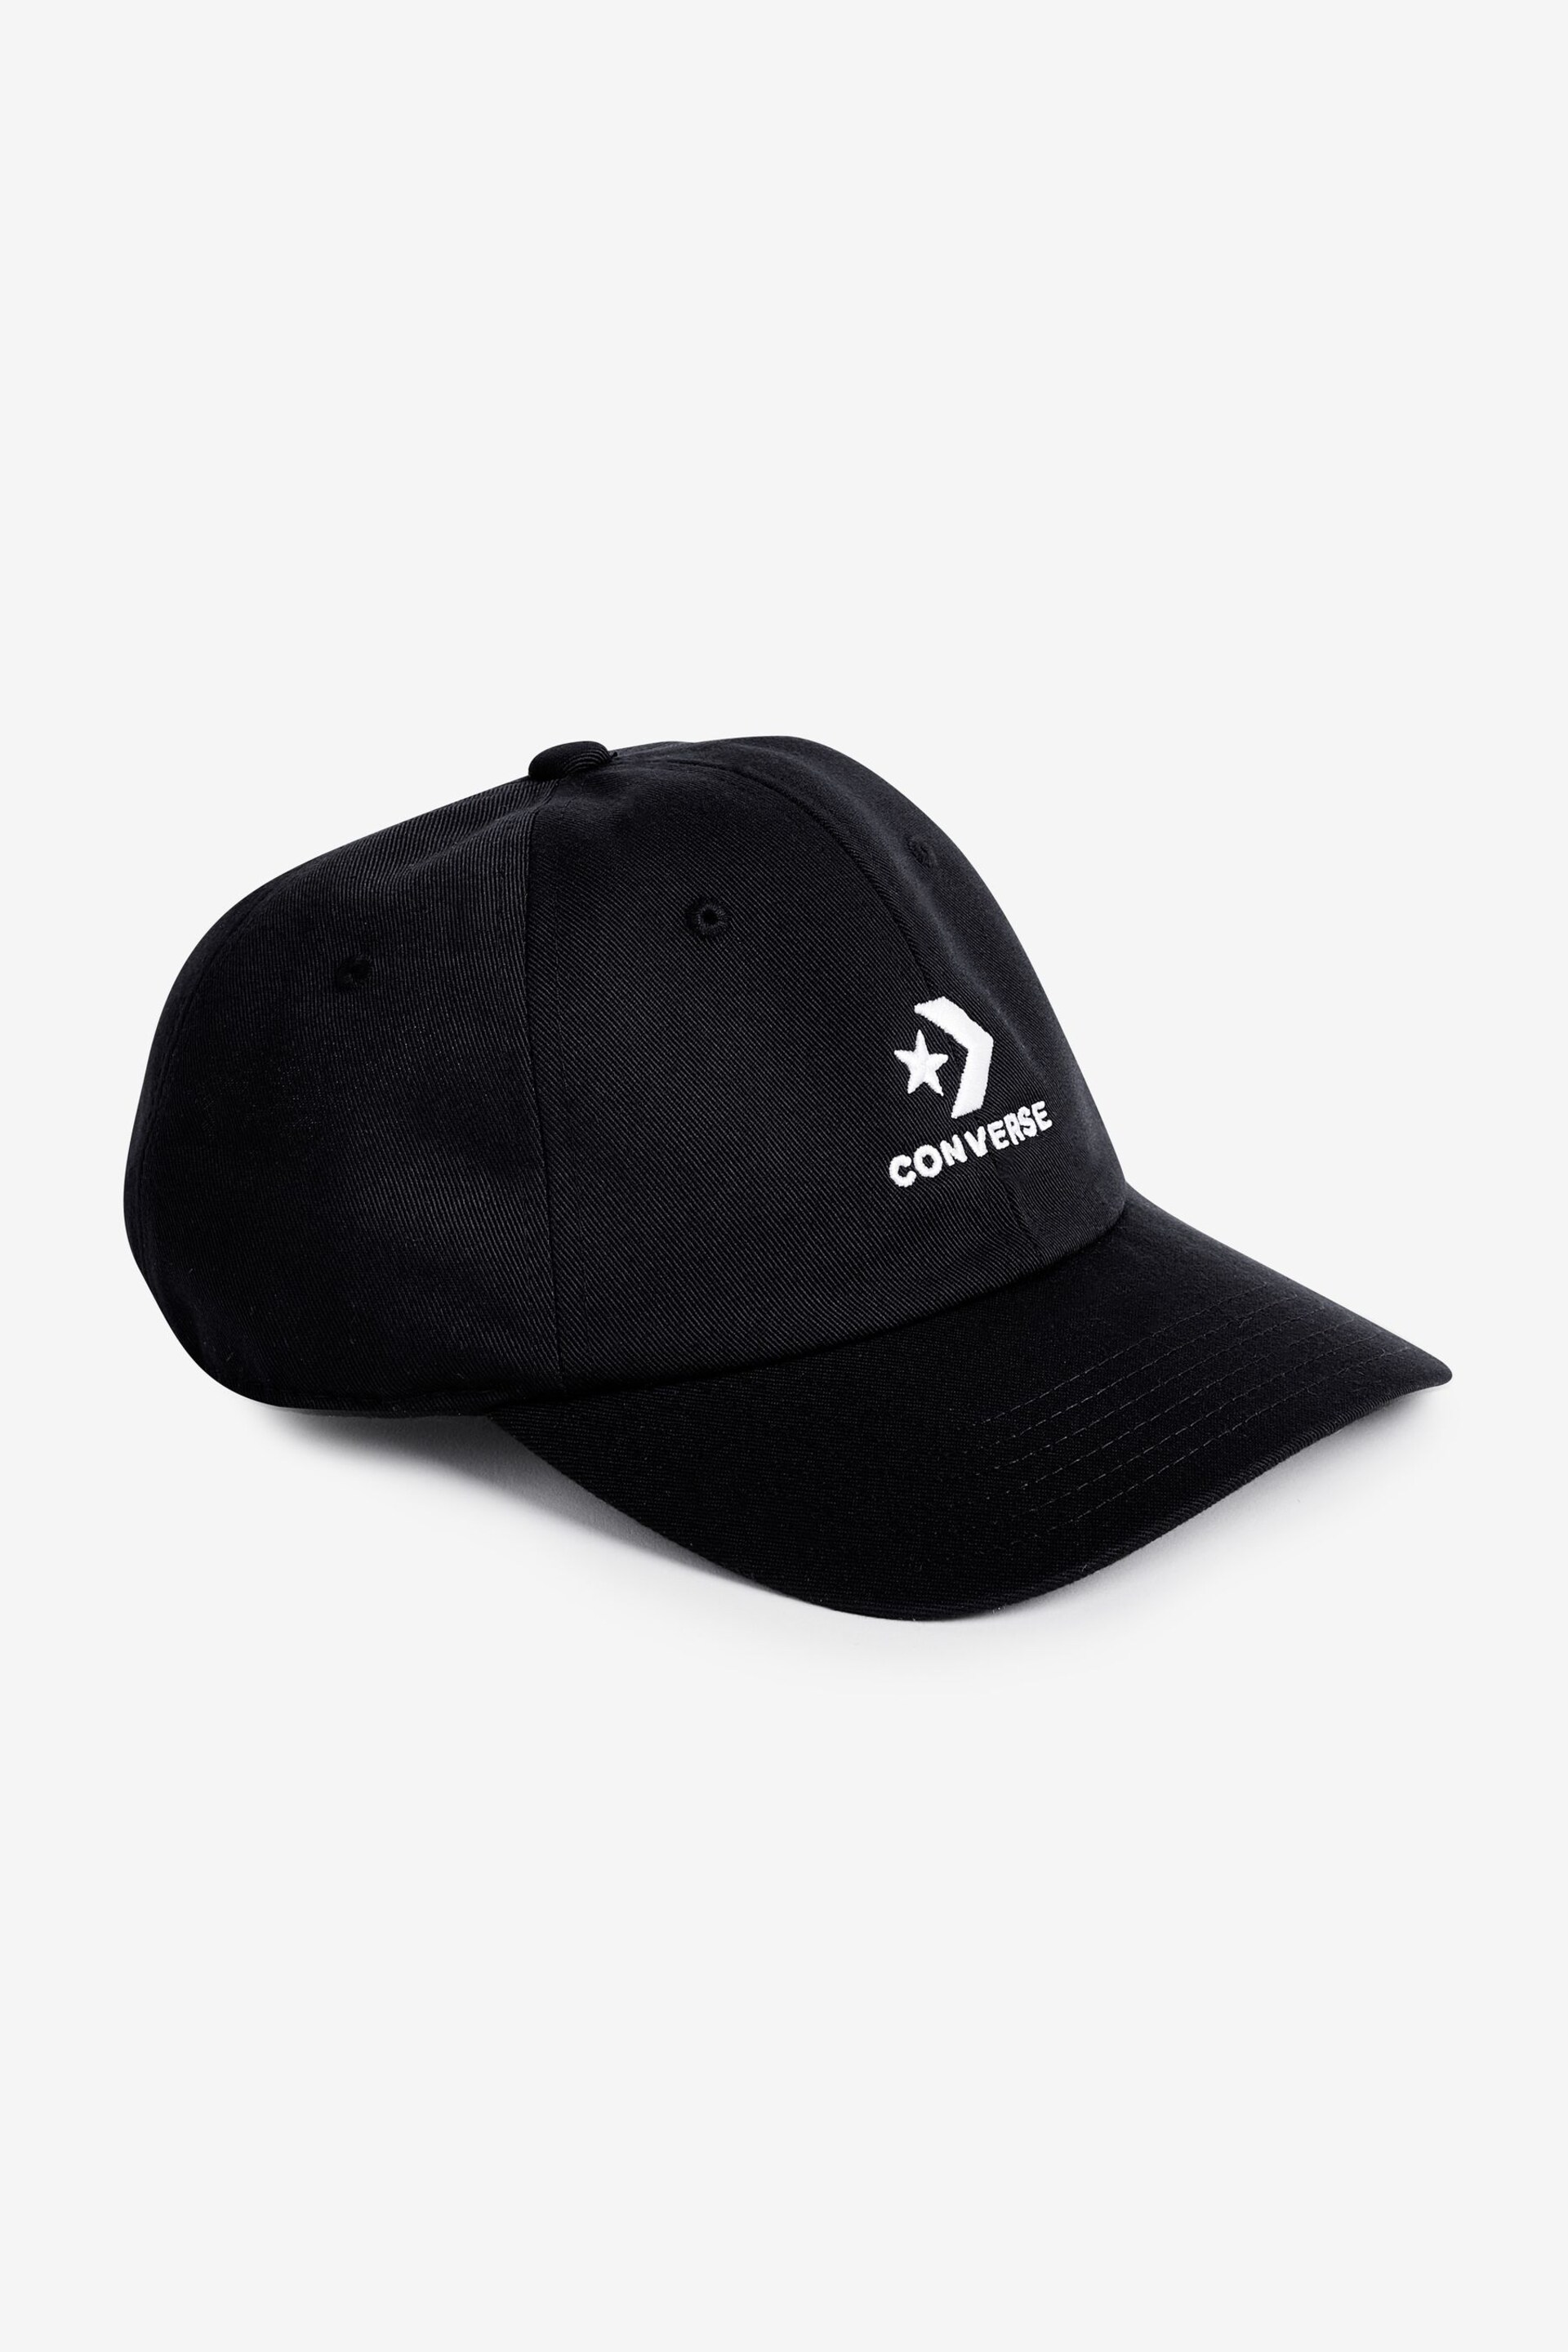 Converse Black Baseball Cap - Image 1 of 2